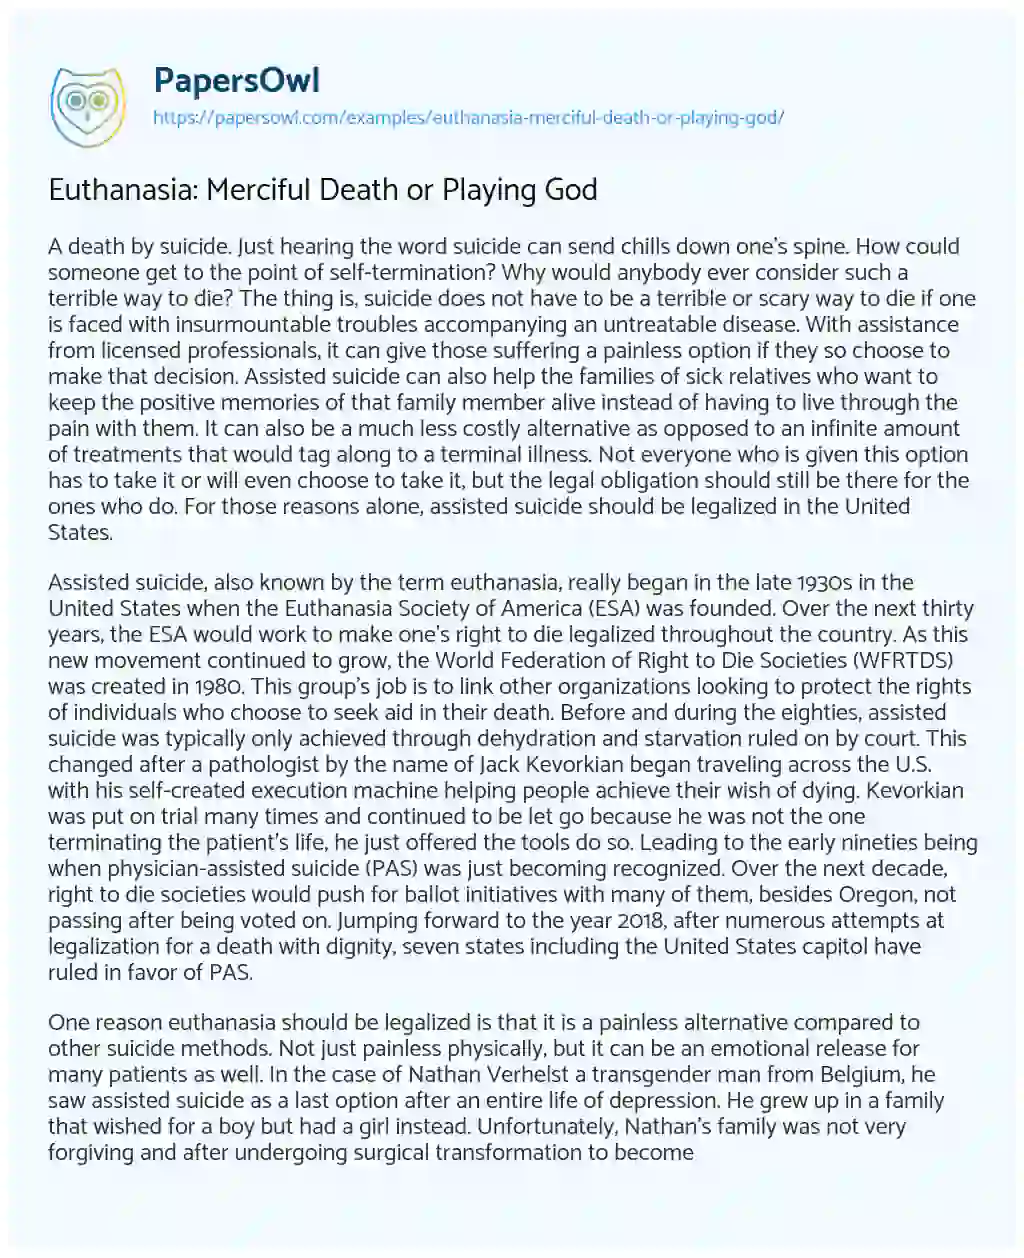 Euthanasia: Merciful Death or Playing God essay